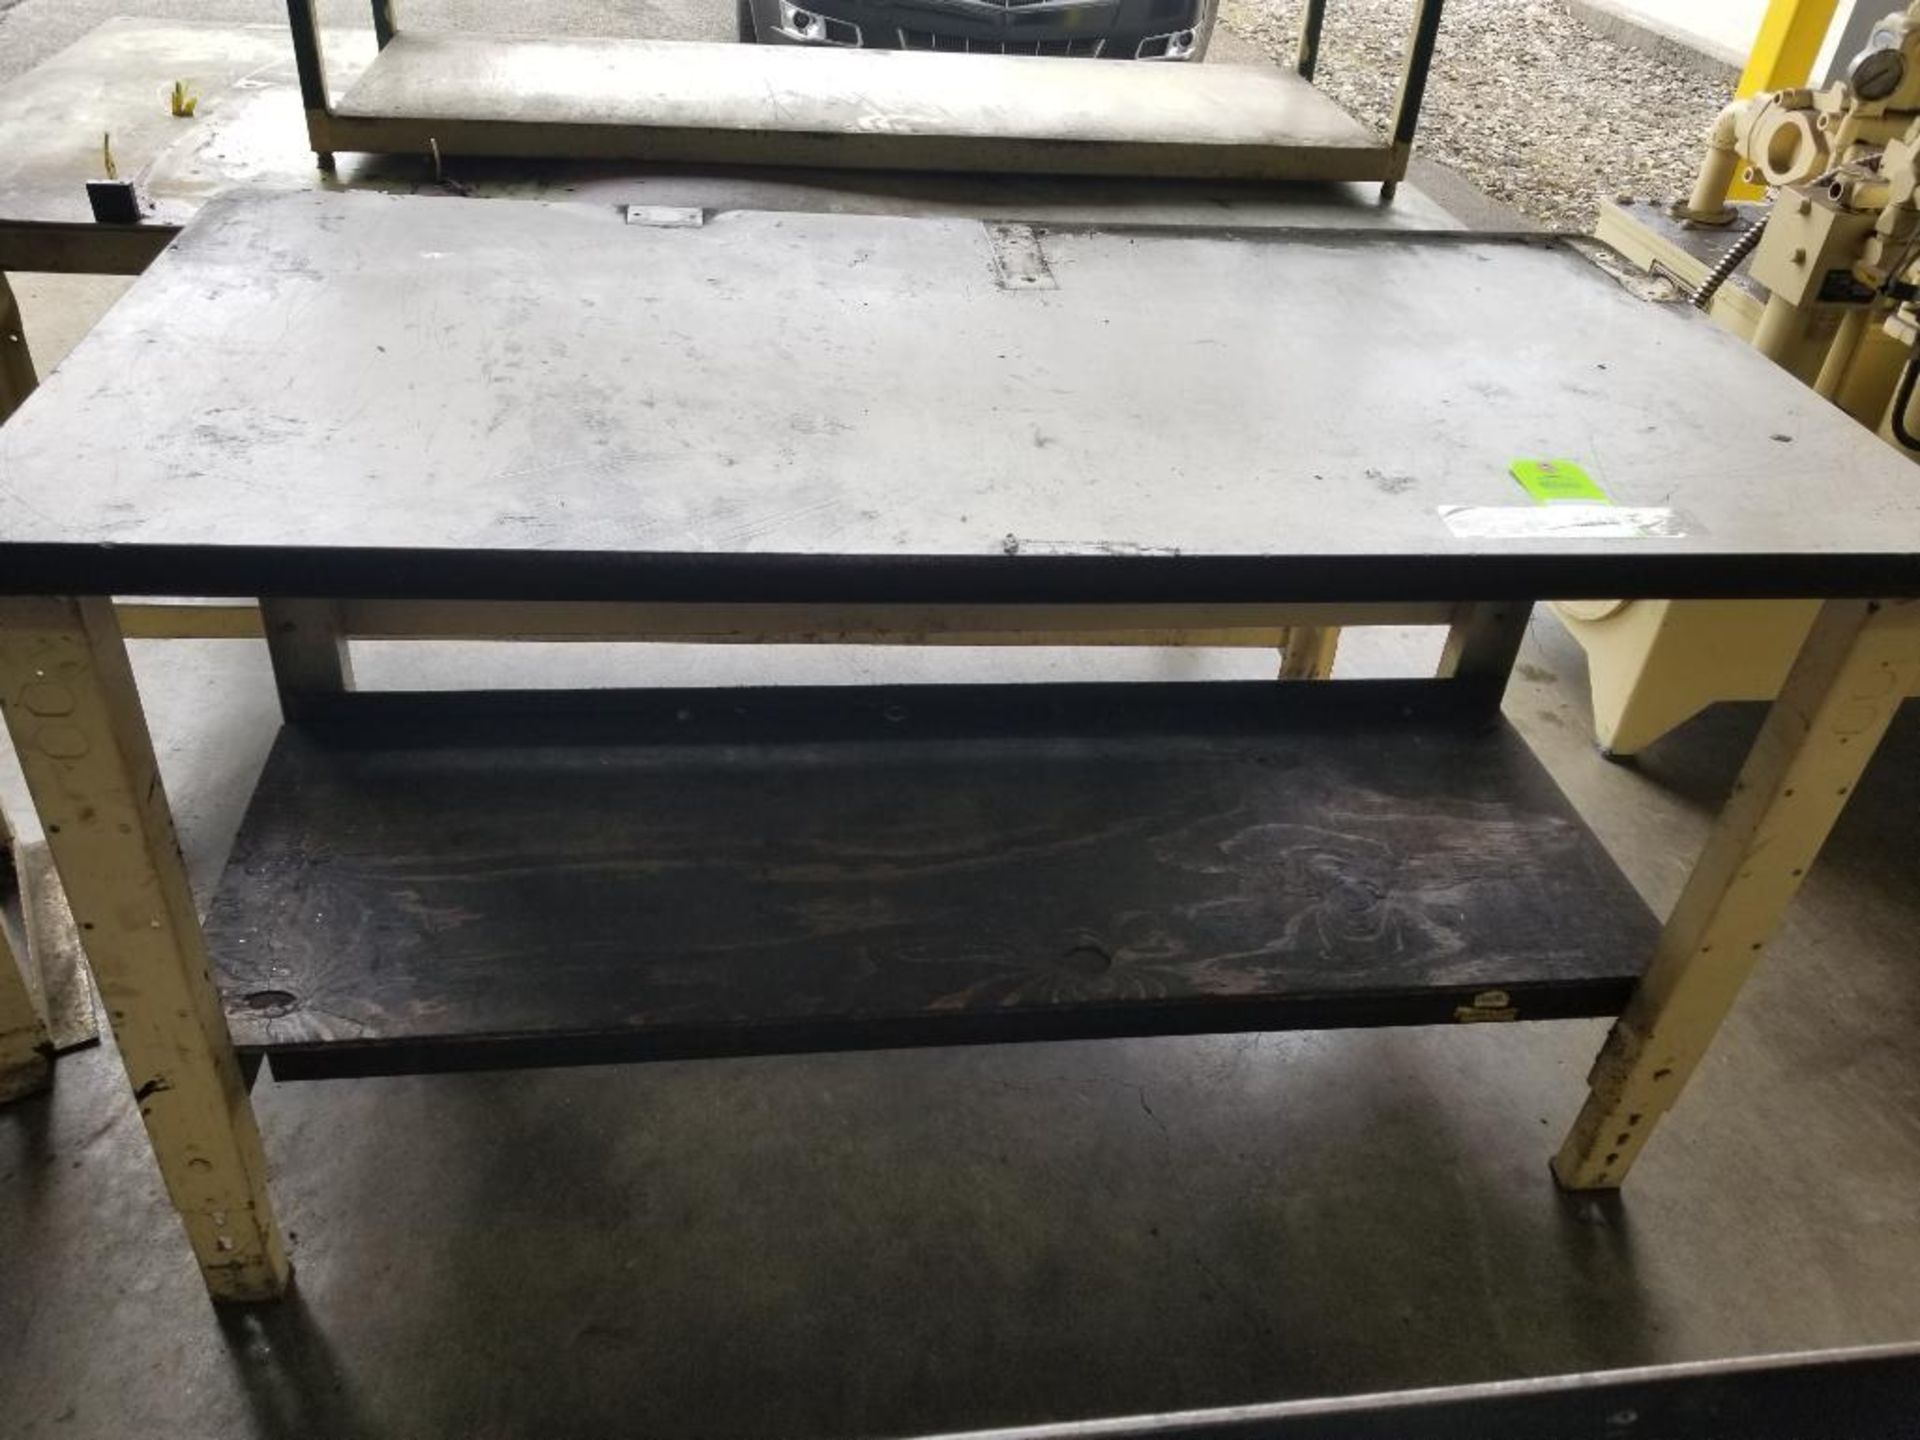 Qty 2 - Industrial work bench. 60x30x36, 26x16x32. LxWxH.